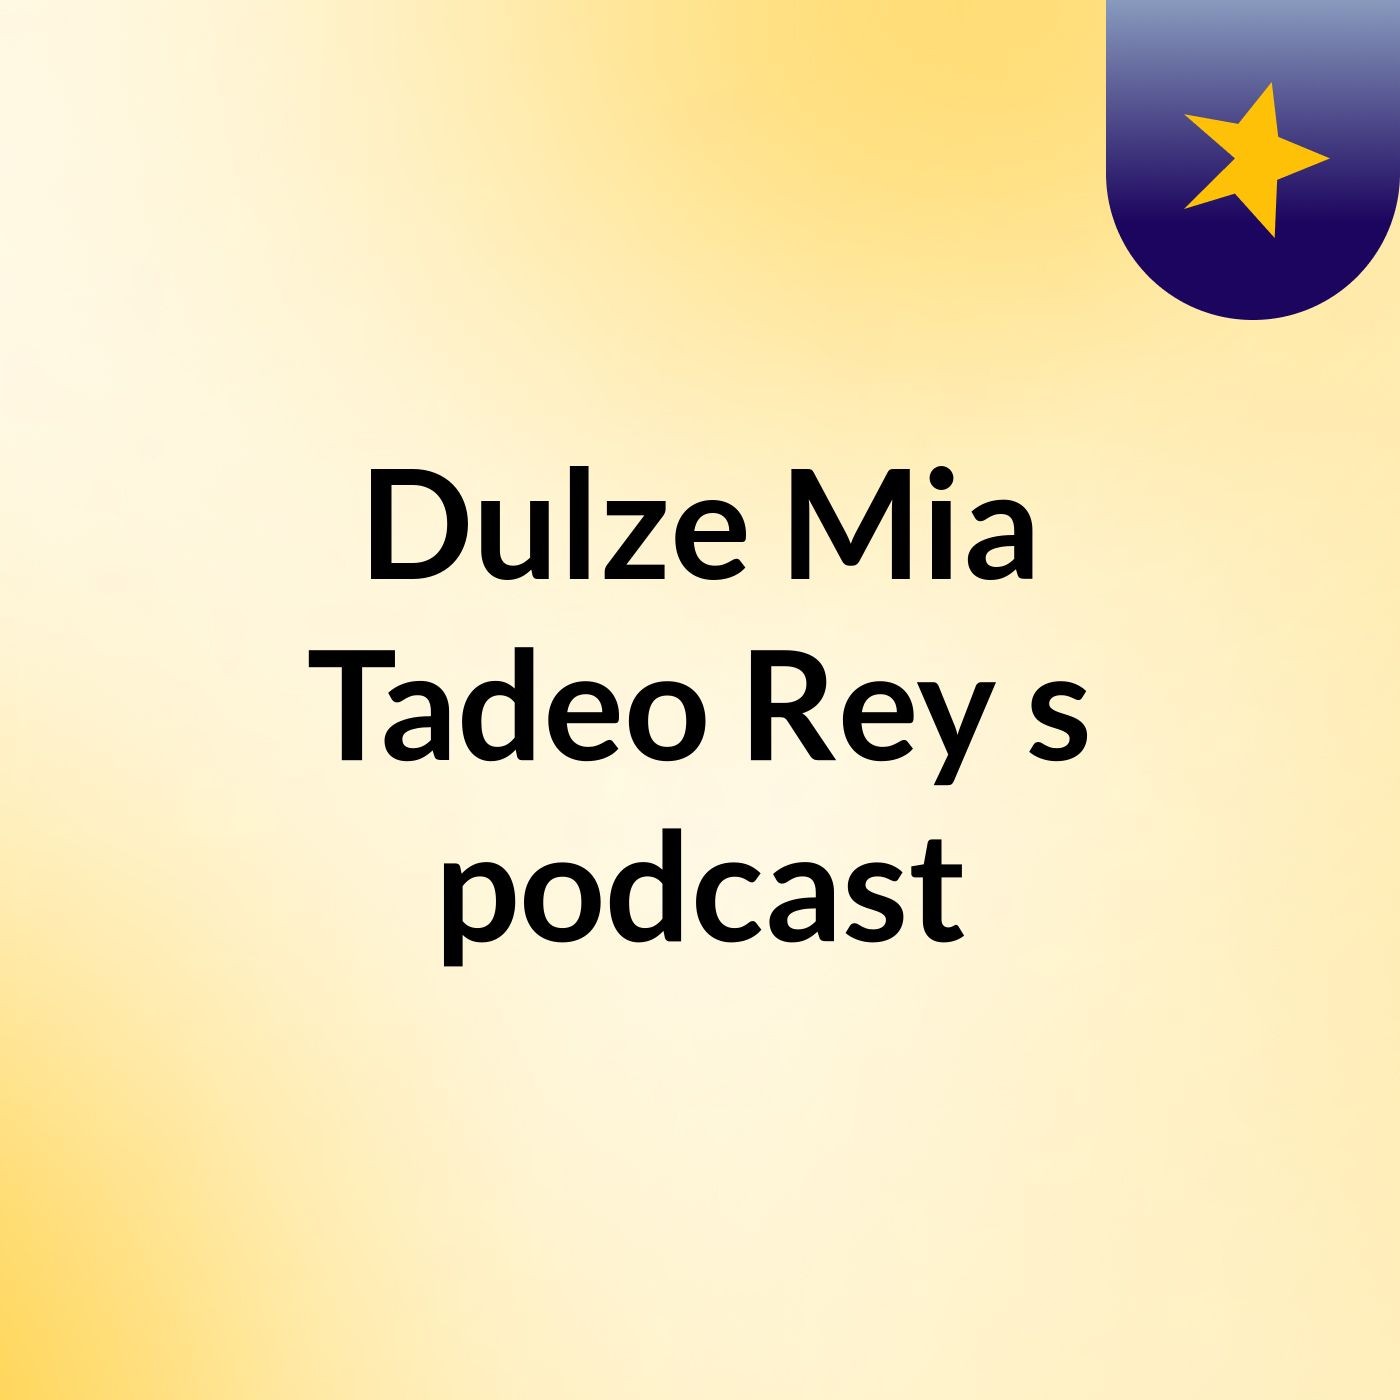 Episodio 19 - Dulze Mia Tadeo Rey's podcast